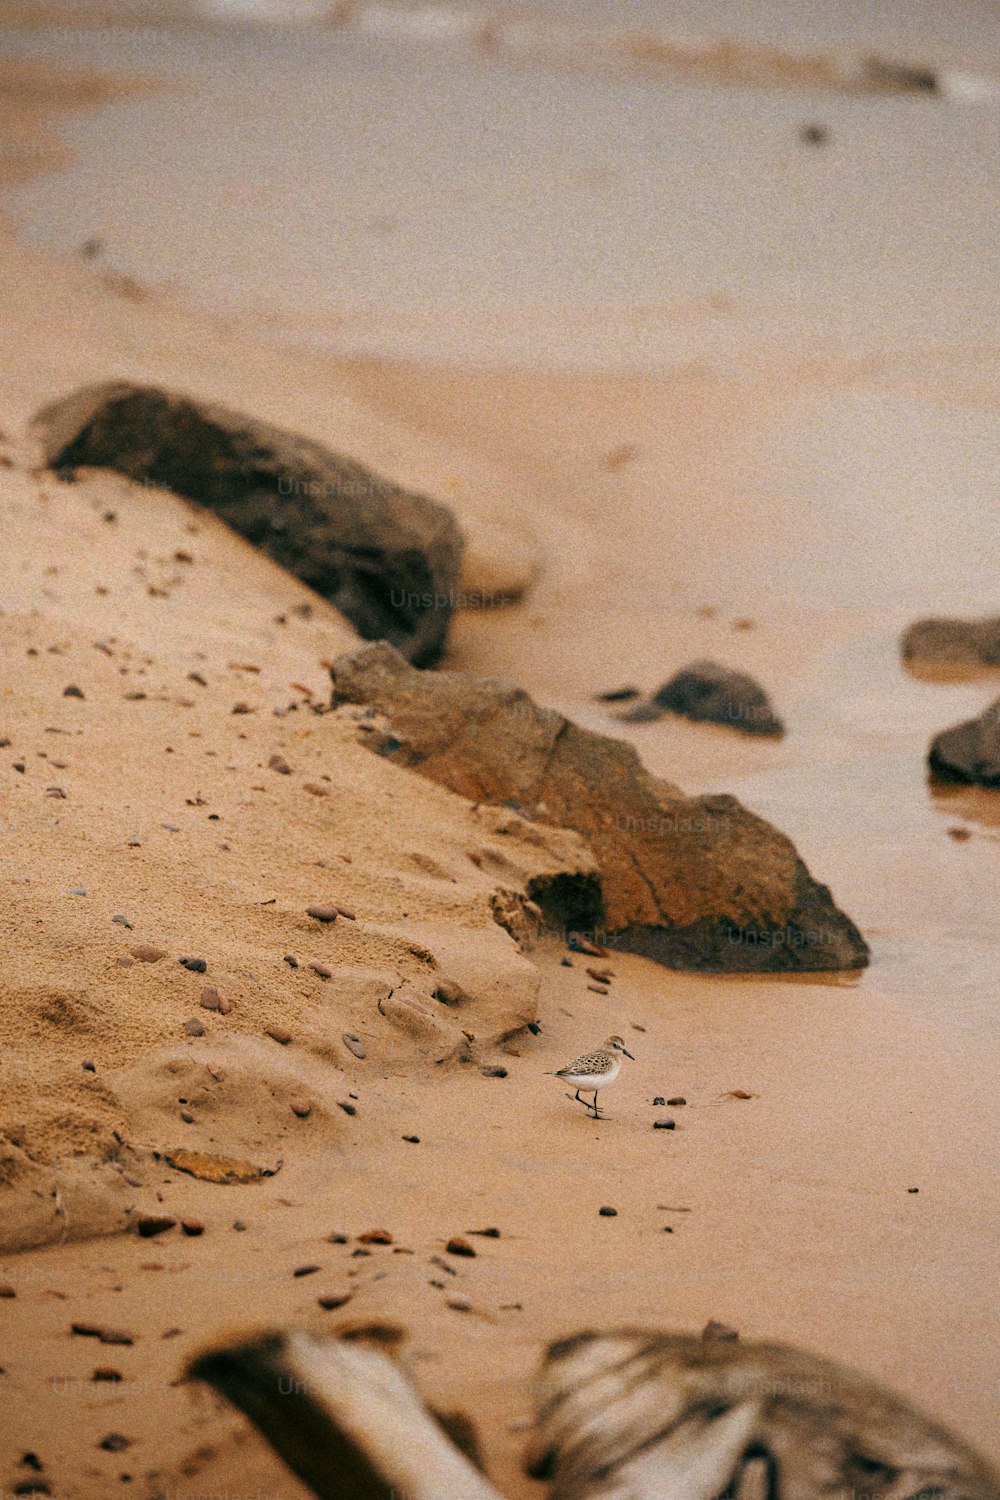 a bird standing on a sandy beach next to a body of water